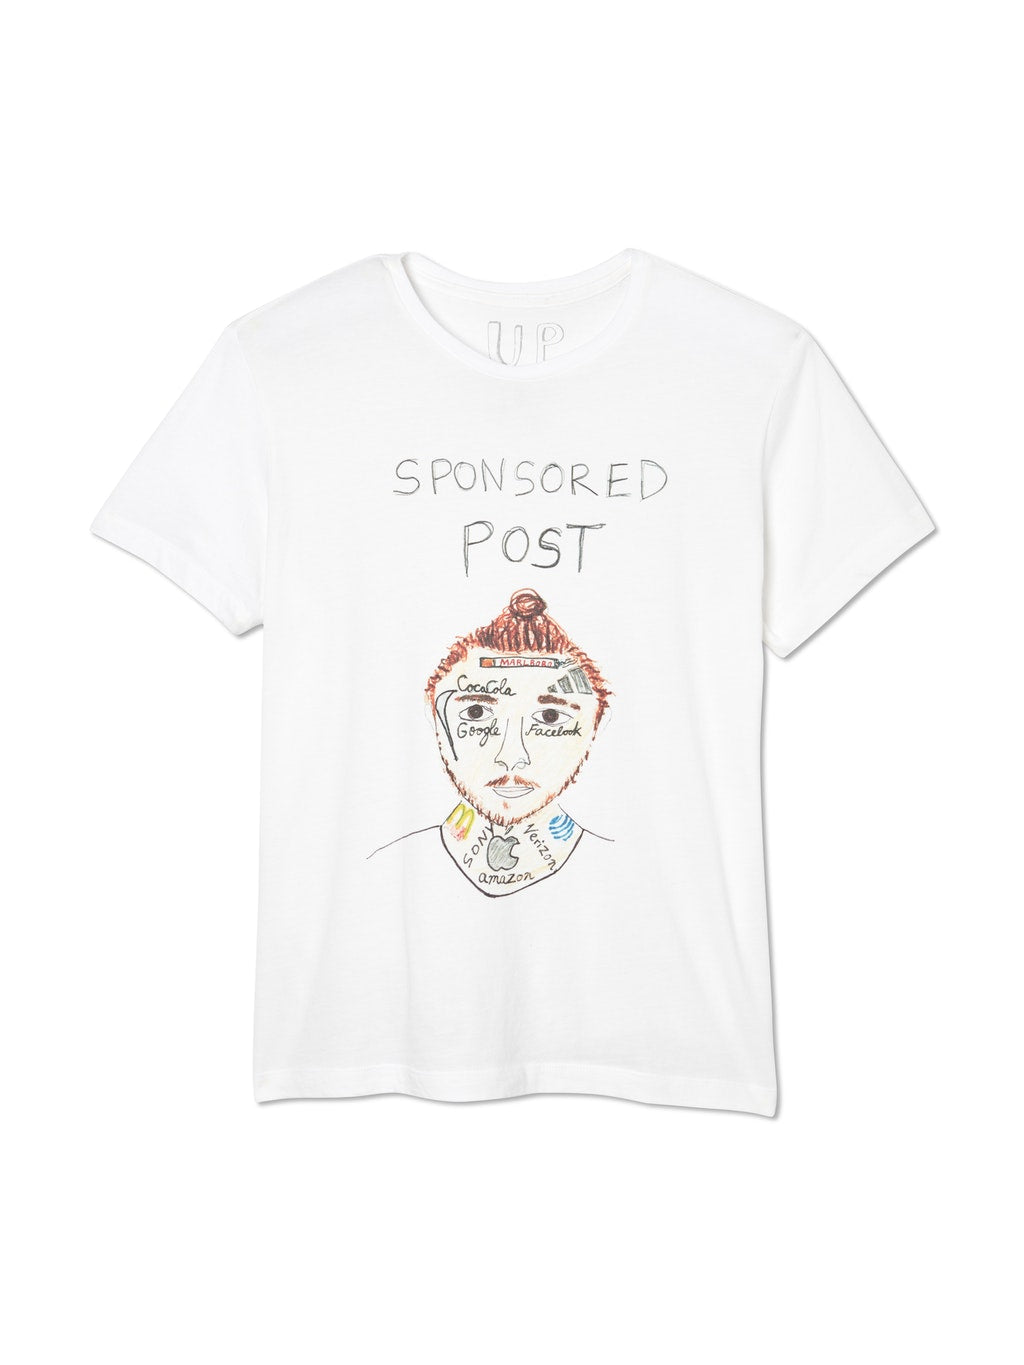 Sponsored Post T-Shirt